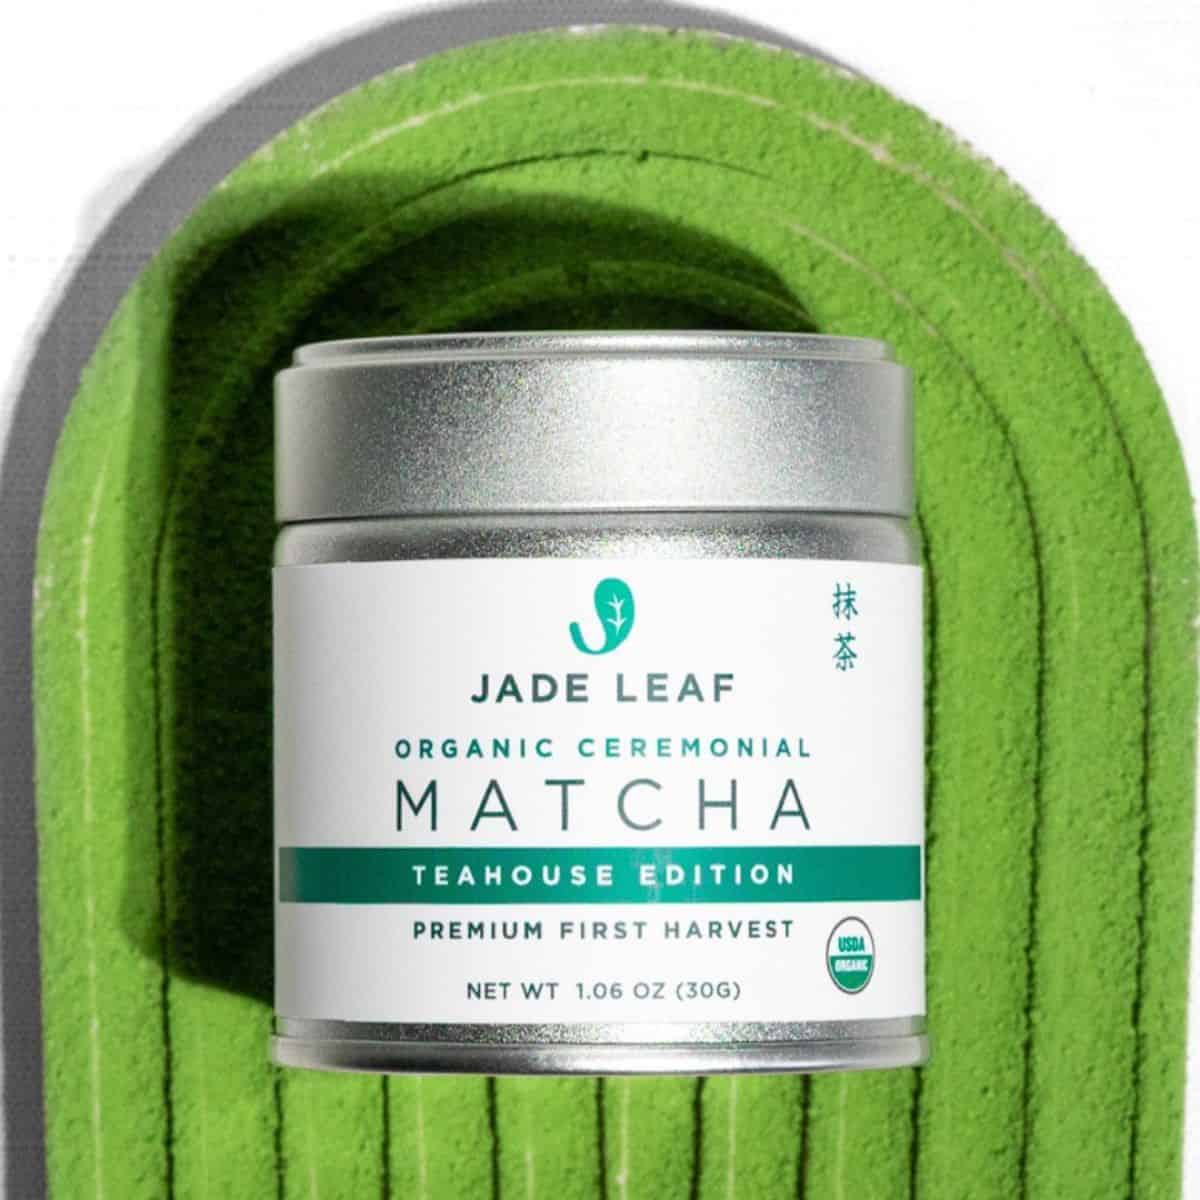 Organic ceremonial matcha powder in a grey bottle